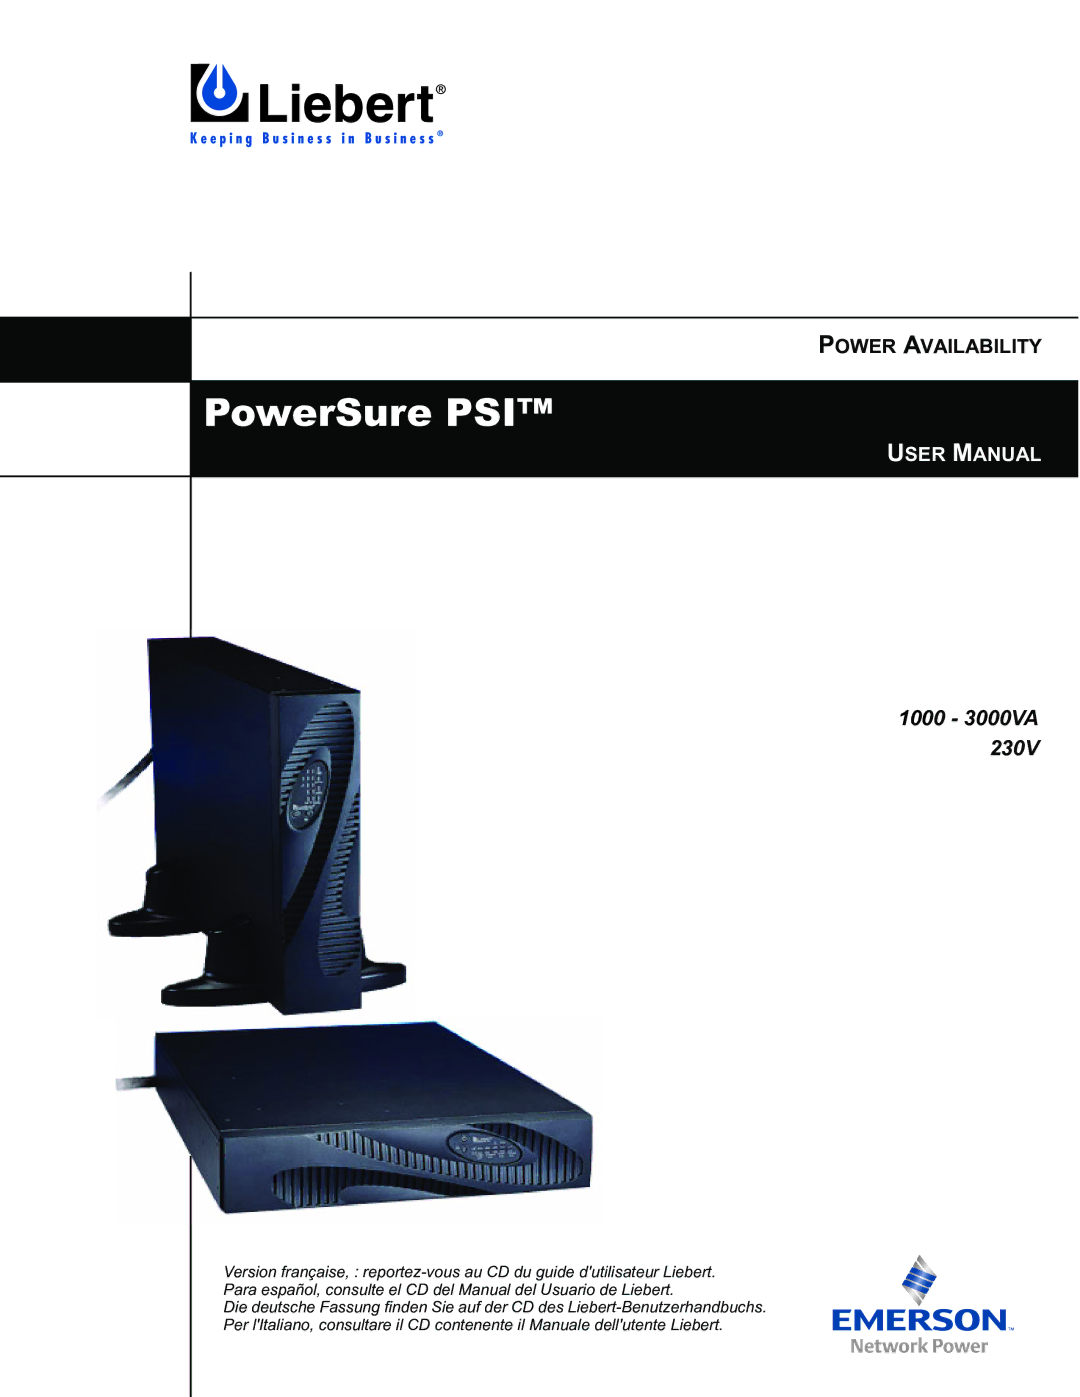 Liebert PSITM user manual PowerSure PSI, Power Availability 